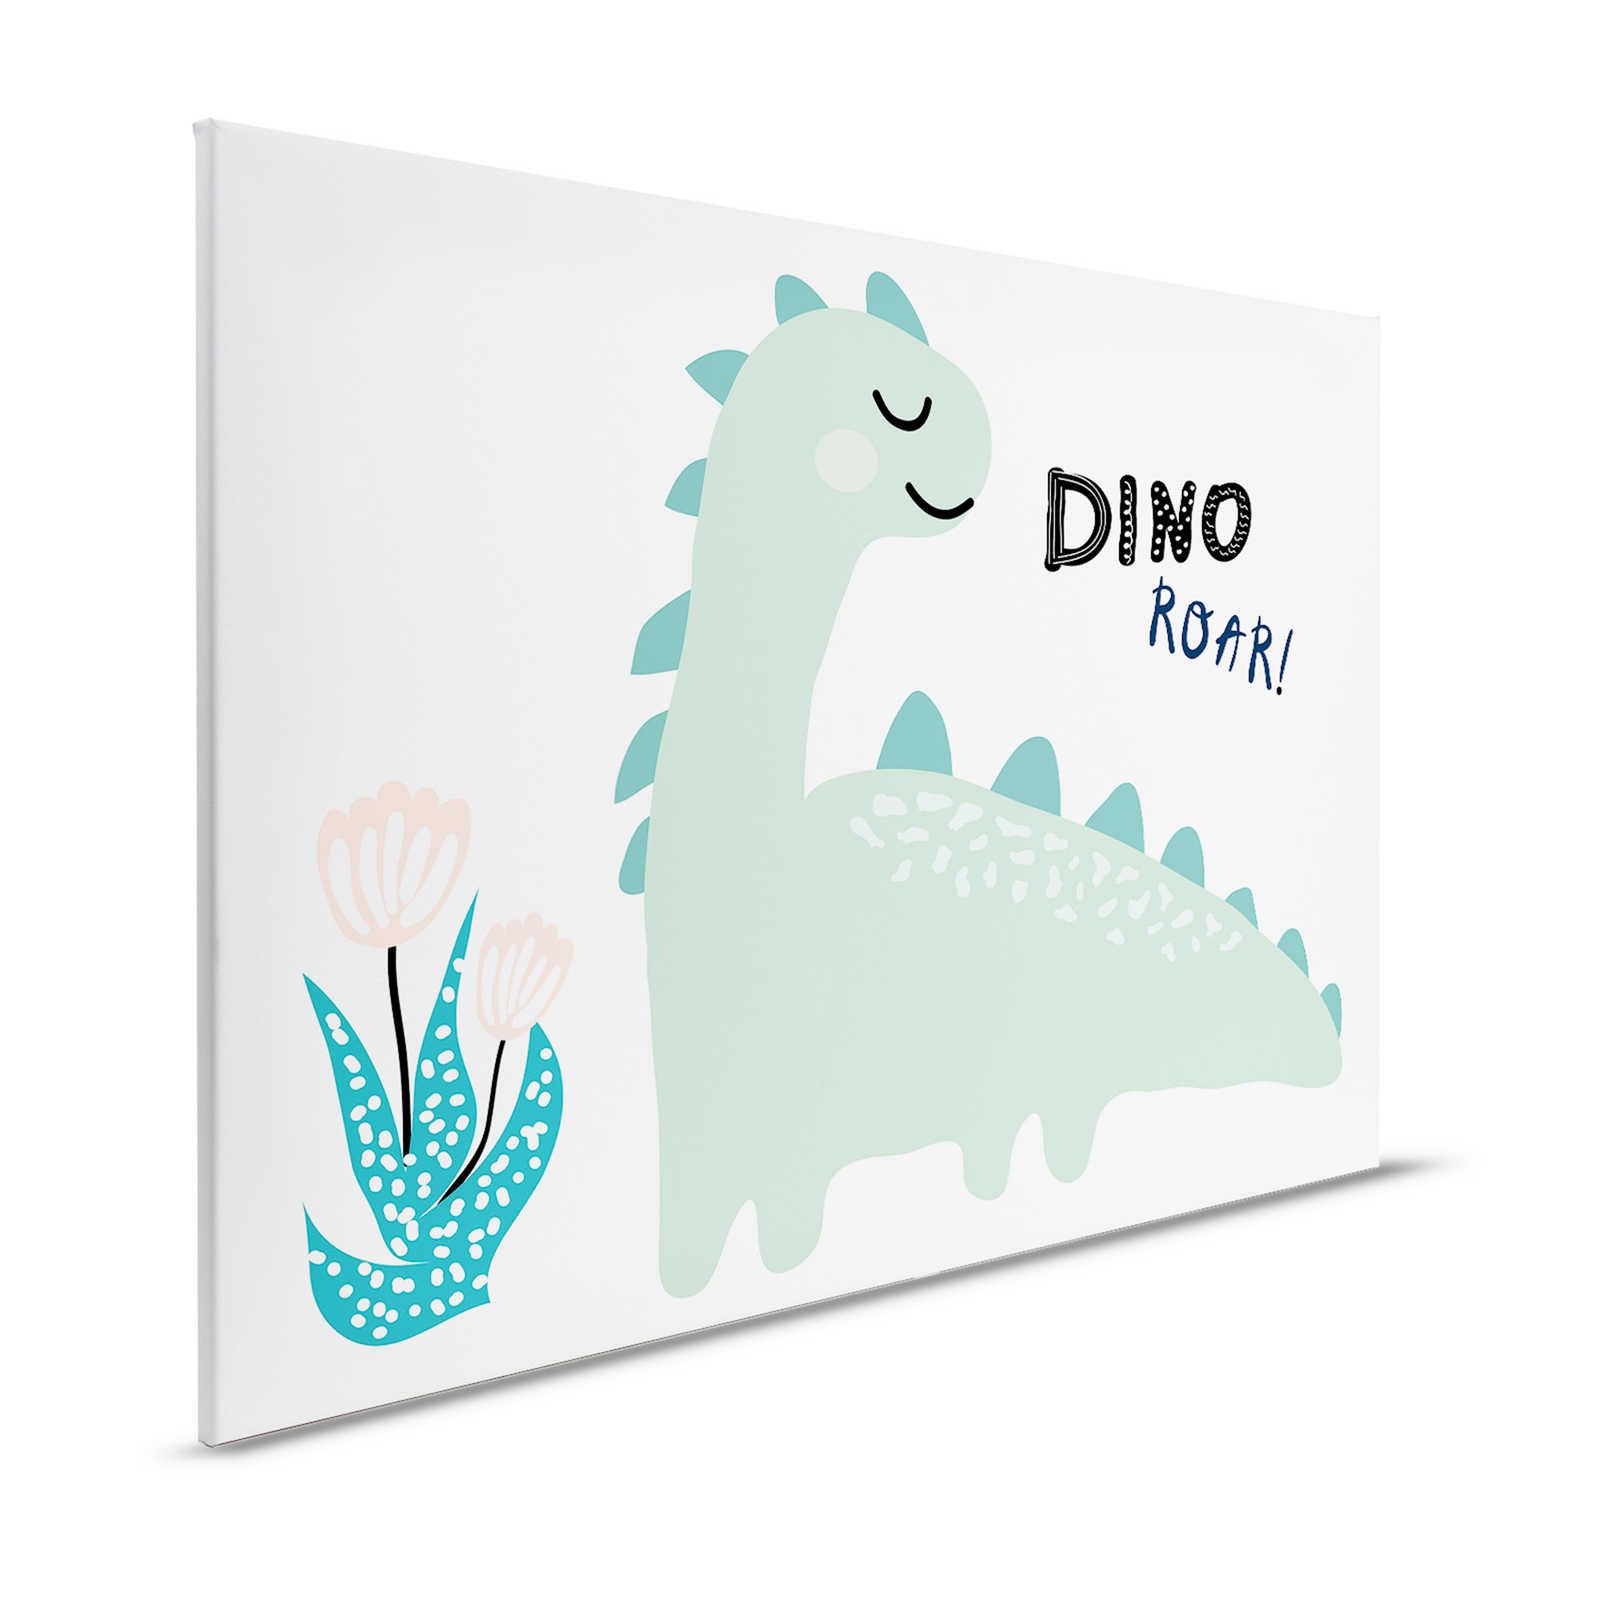 Toile avec dinosaure peint - 120 cm x 80 cm
